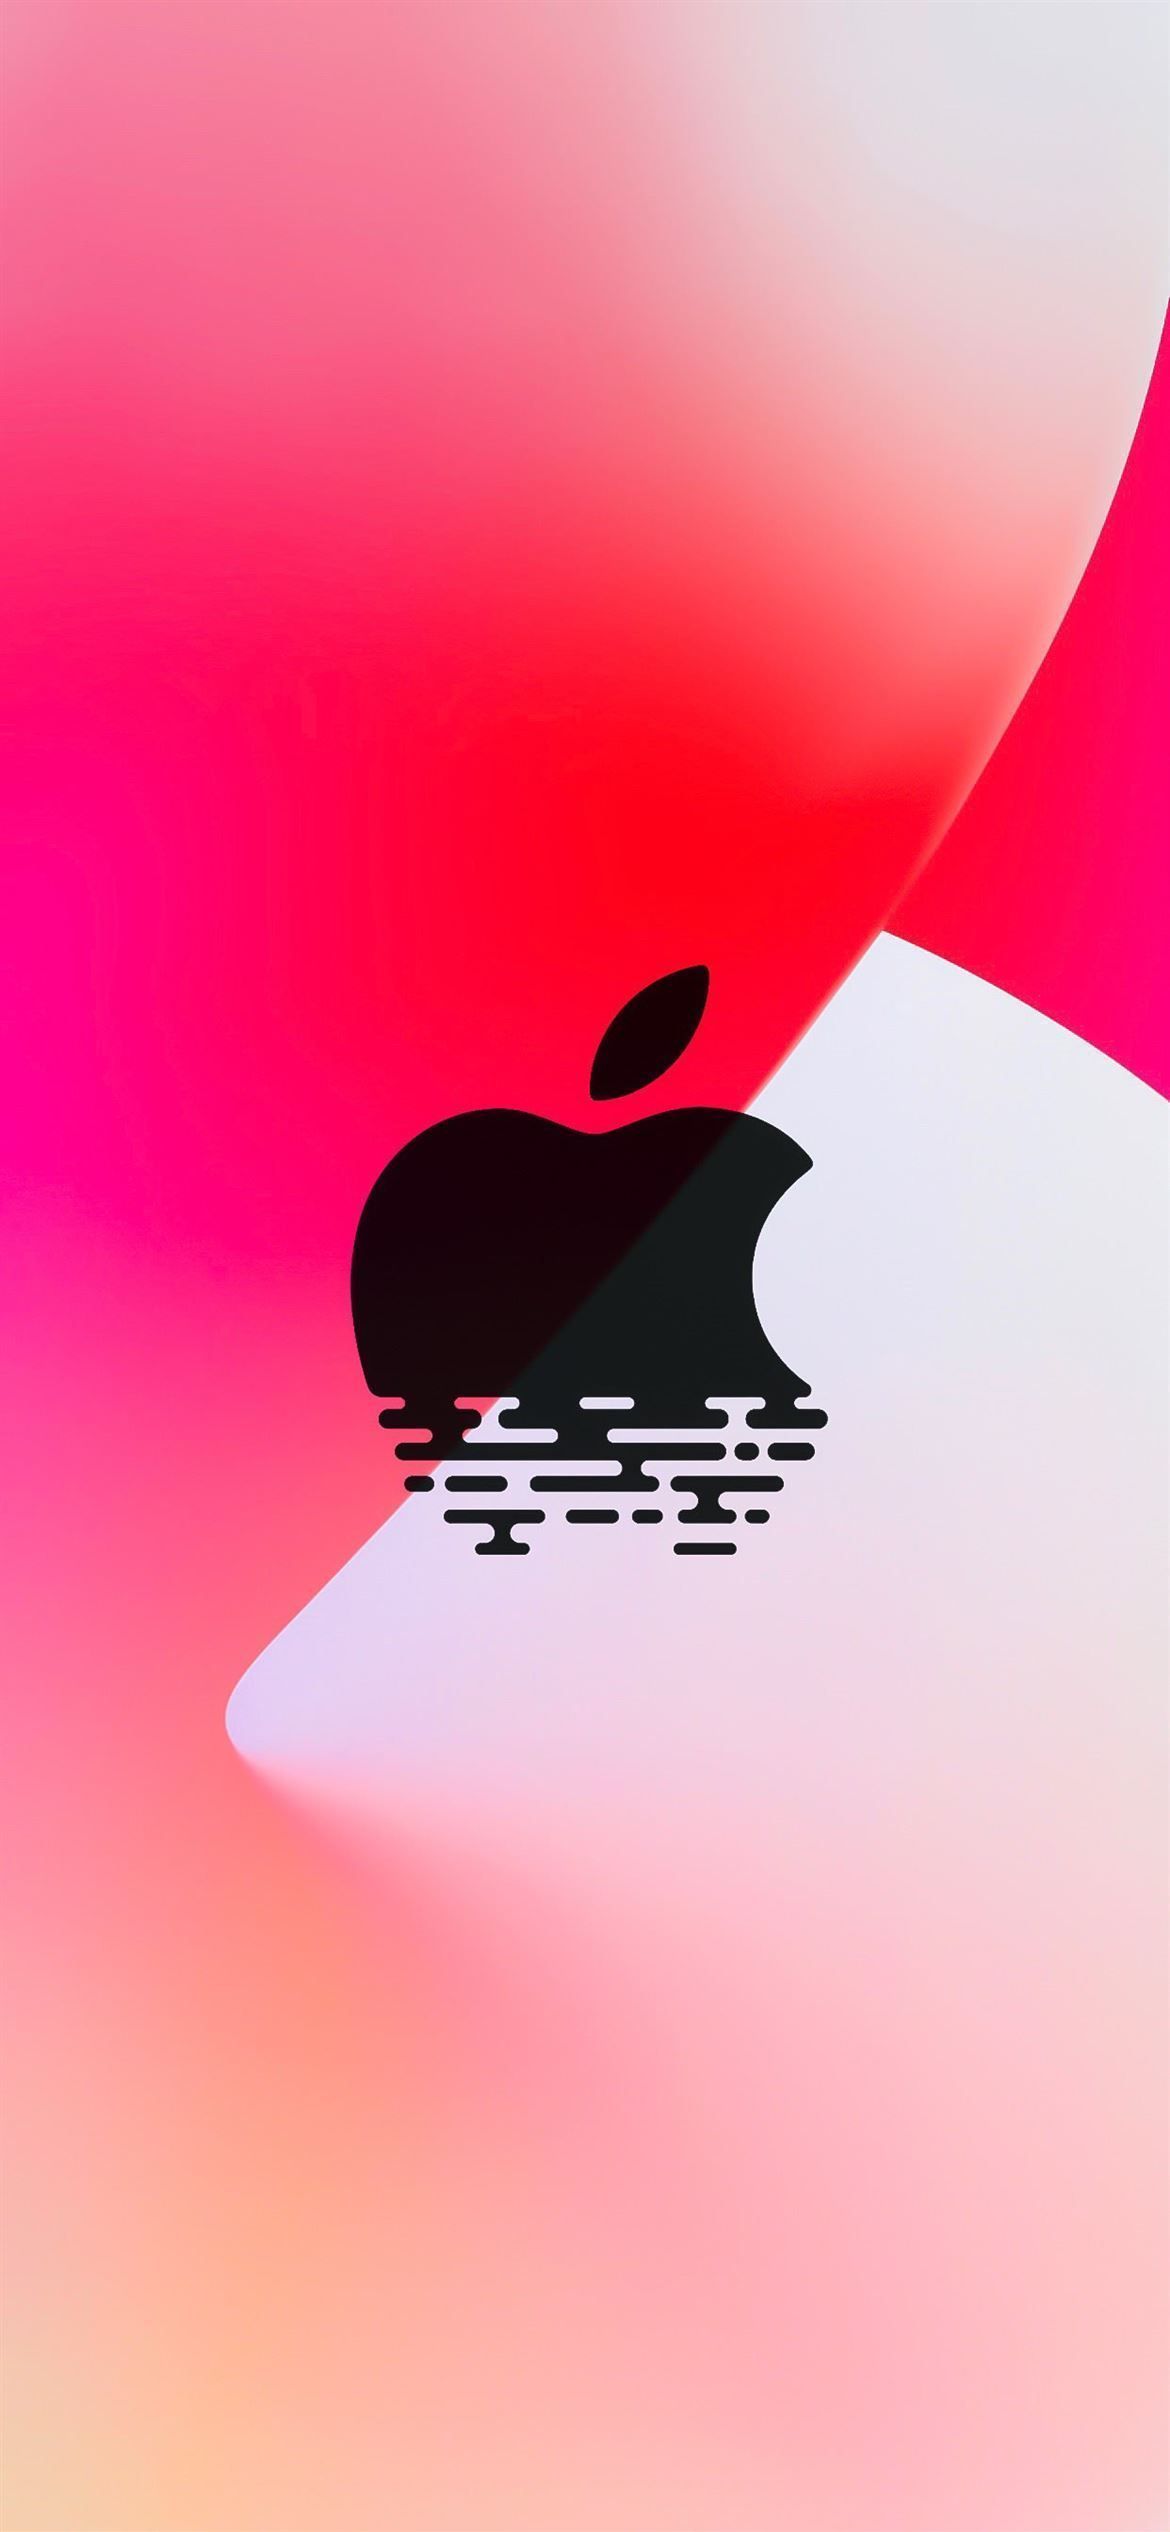 Apple Hintergrundbild 1170x2532. Apple Store Marina Bay Sands by AR7 #AR7 #aesthetic. Apple iphone wallpaper hd, Apple logo wallpaper, Apple wallpaper iphone